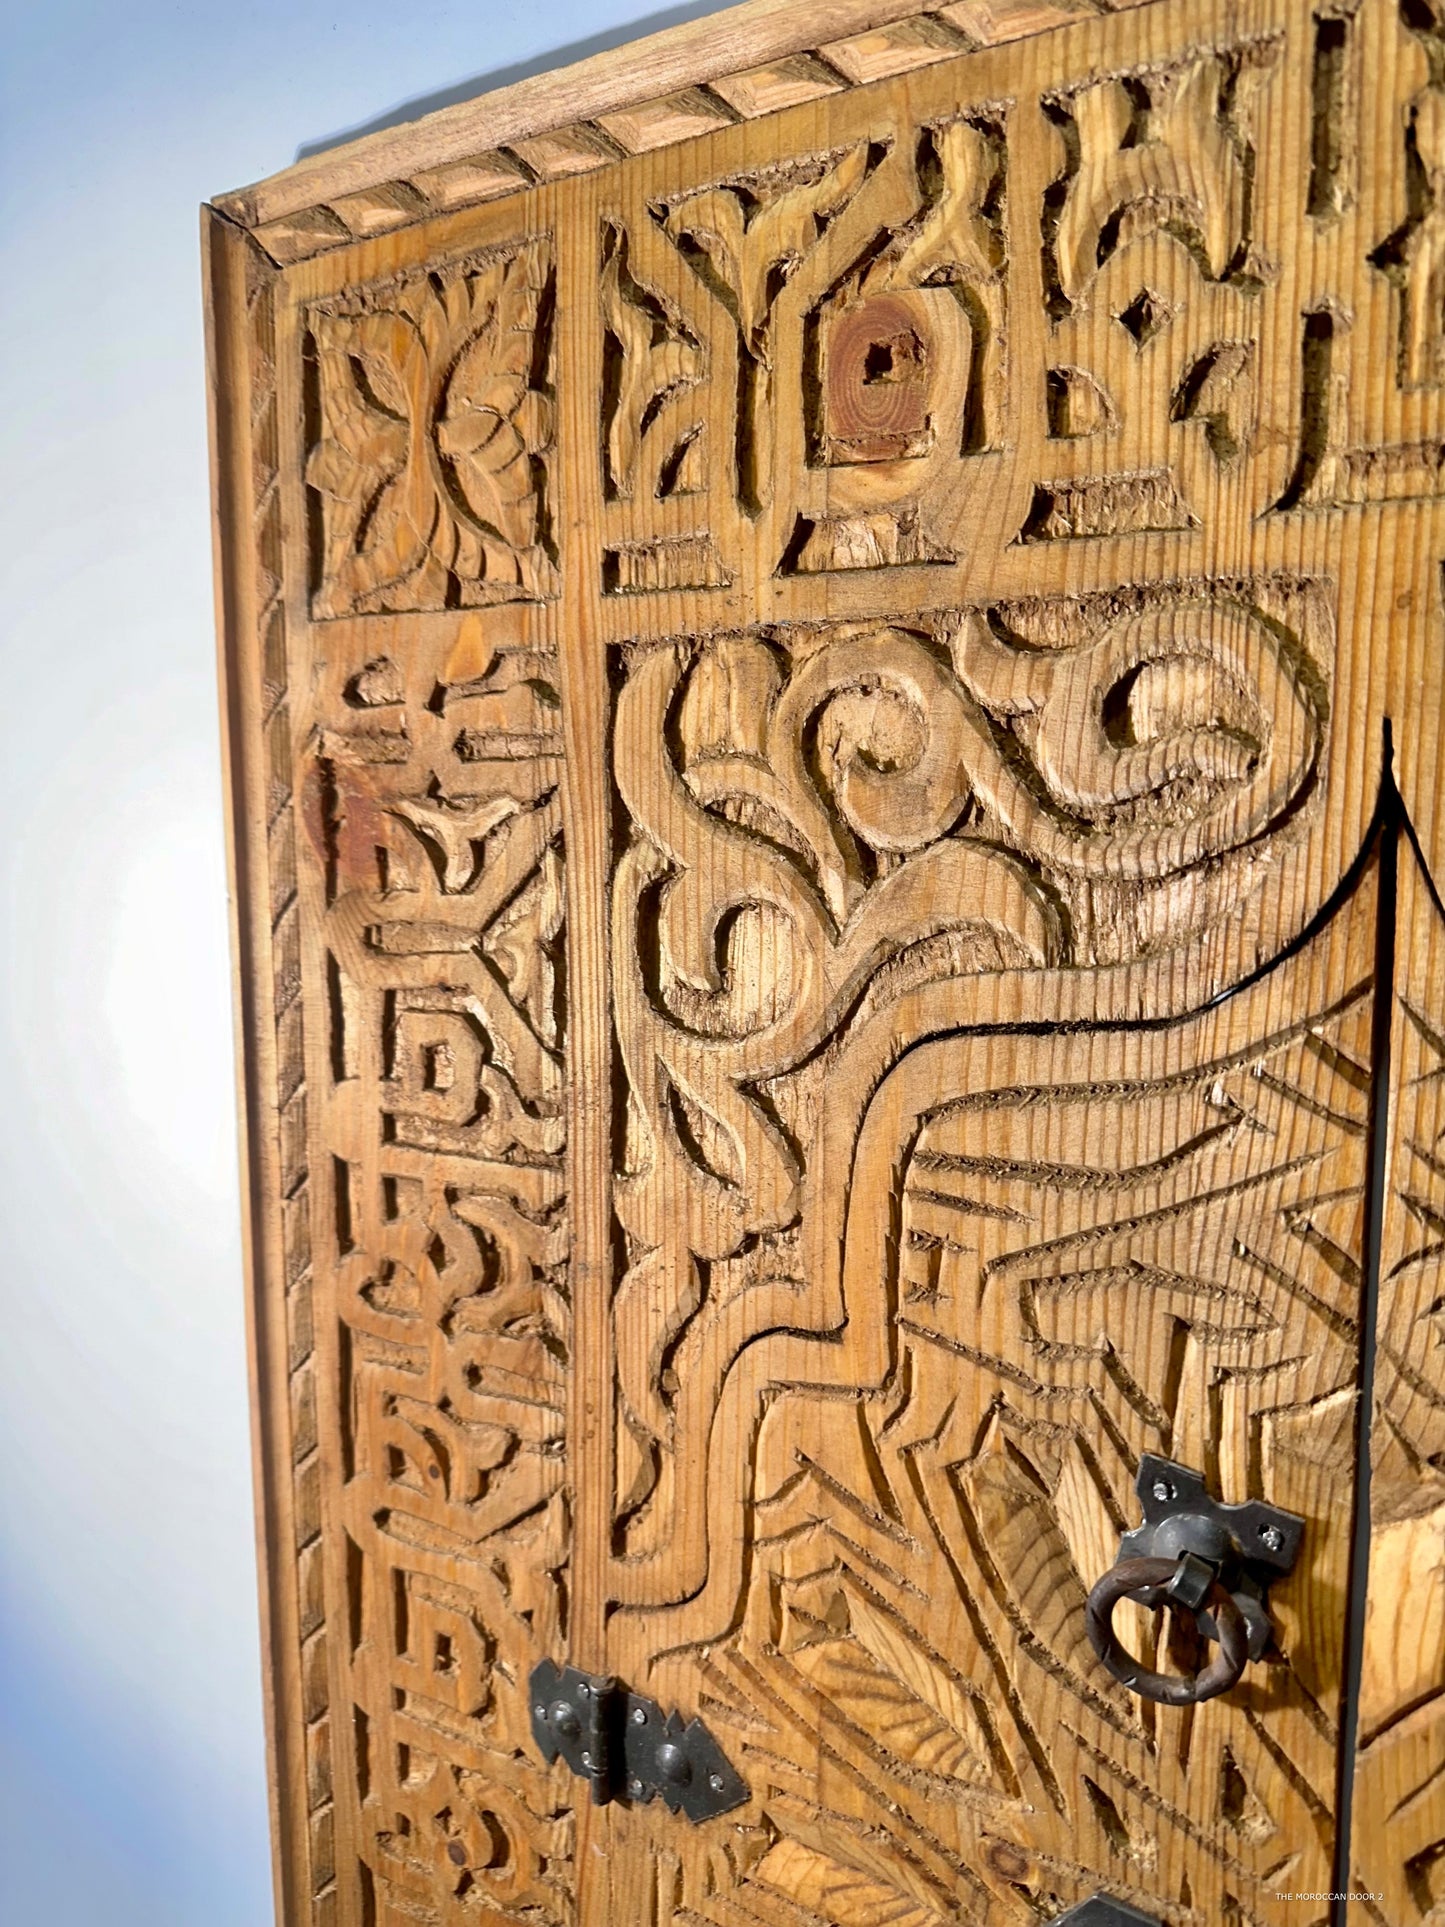 Hand Carved Wooden Mirror - Window - Moroccan artisanal craftsmanship - Exquisite wooden costume size